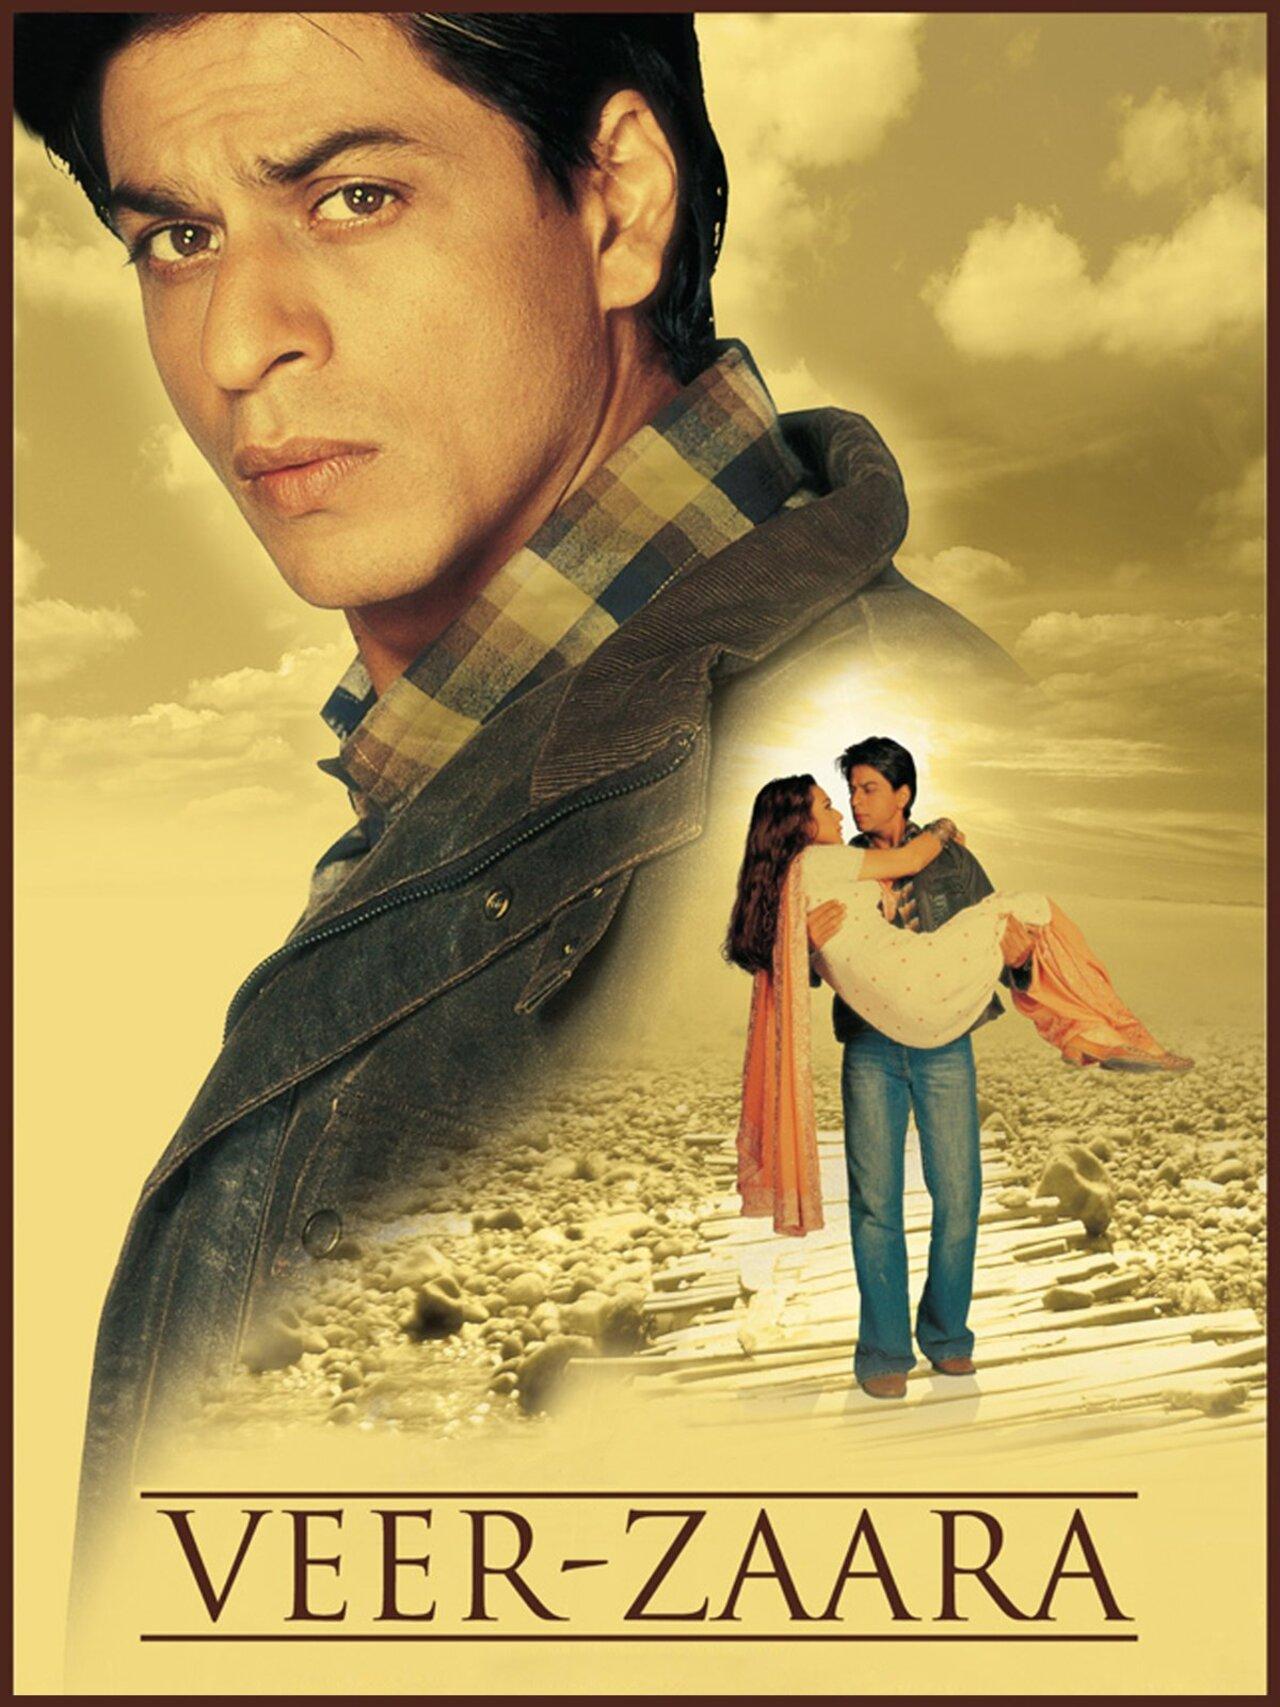 ‘Aisa Des Hai Mera’ is a soul-stirring Hindi song from the 2004 Bollywood film ‘Veer-Zaara’. The film was directed by Yash Chopra and stars Shah Rukh Khan as Veer Pratap Singh and Preity Zinta as Zaara Haayat Khan in the lead roles